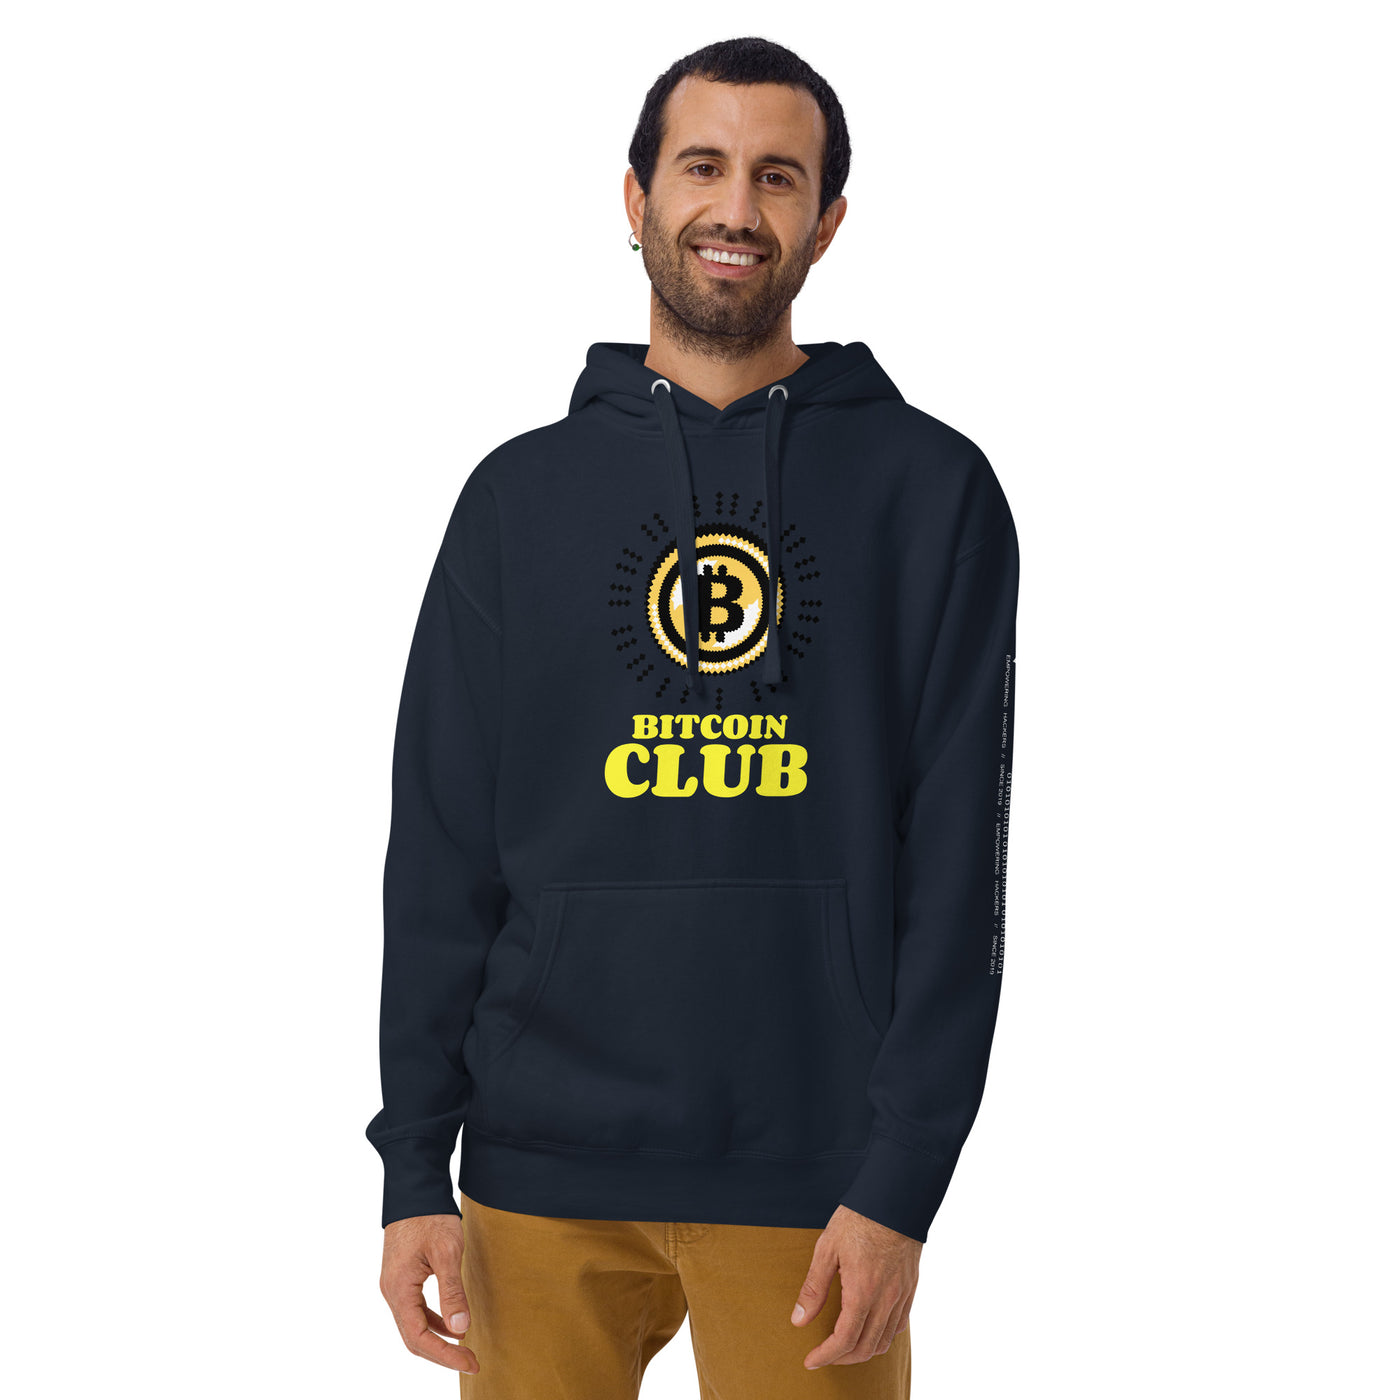 Bitcoin Club 8 bit style Unisex Hoodie